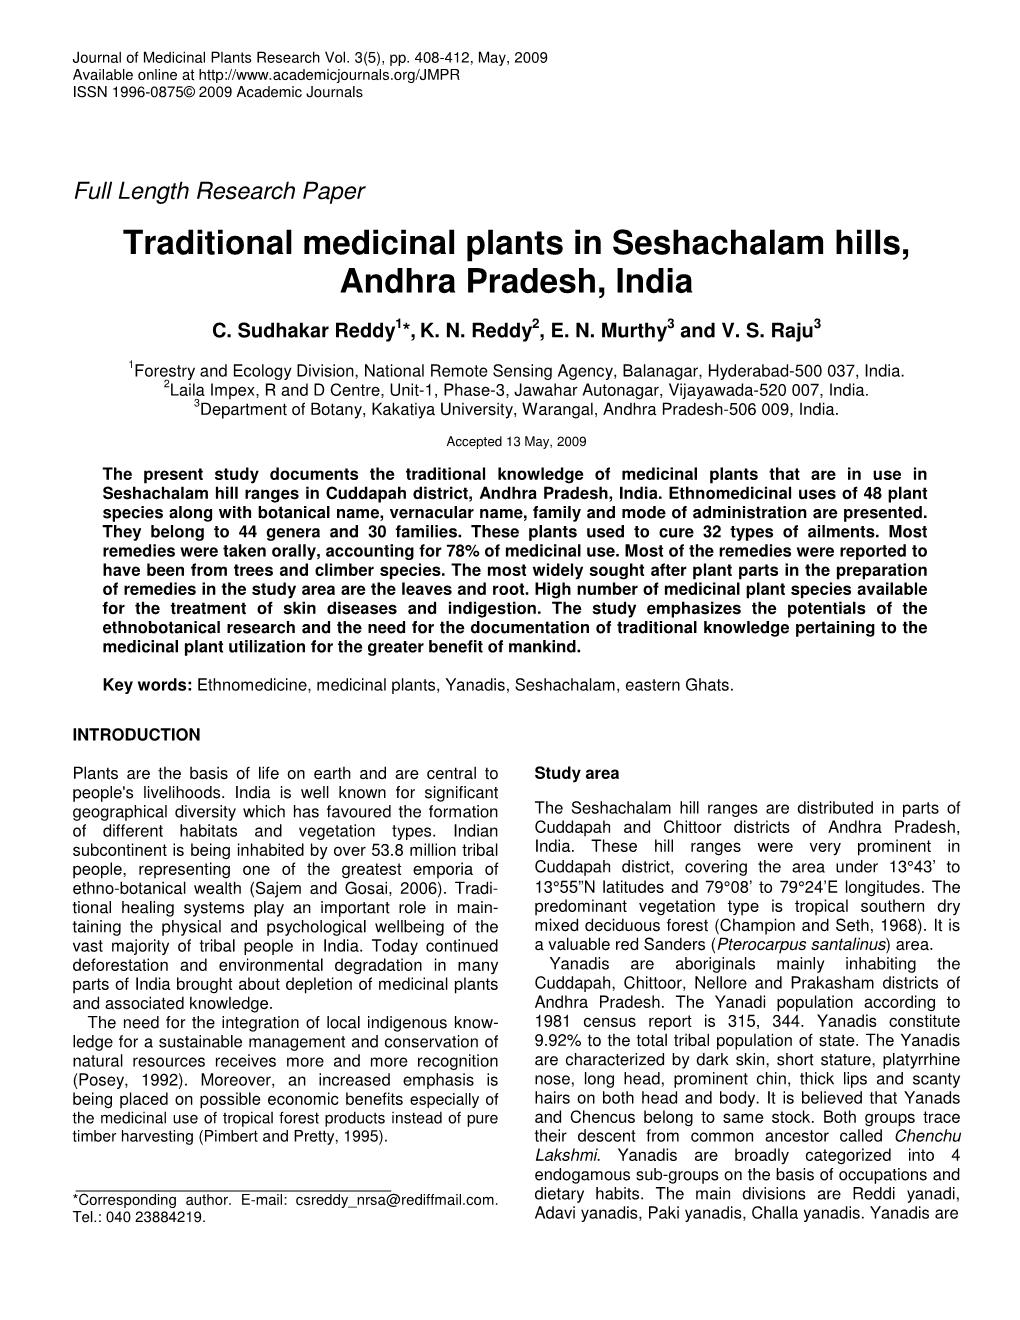 Traditional Medicinal Plants in Seshachalam Hills, Andhra Pradesh, India